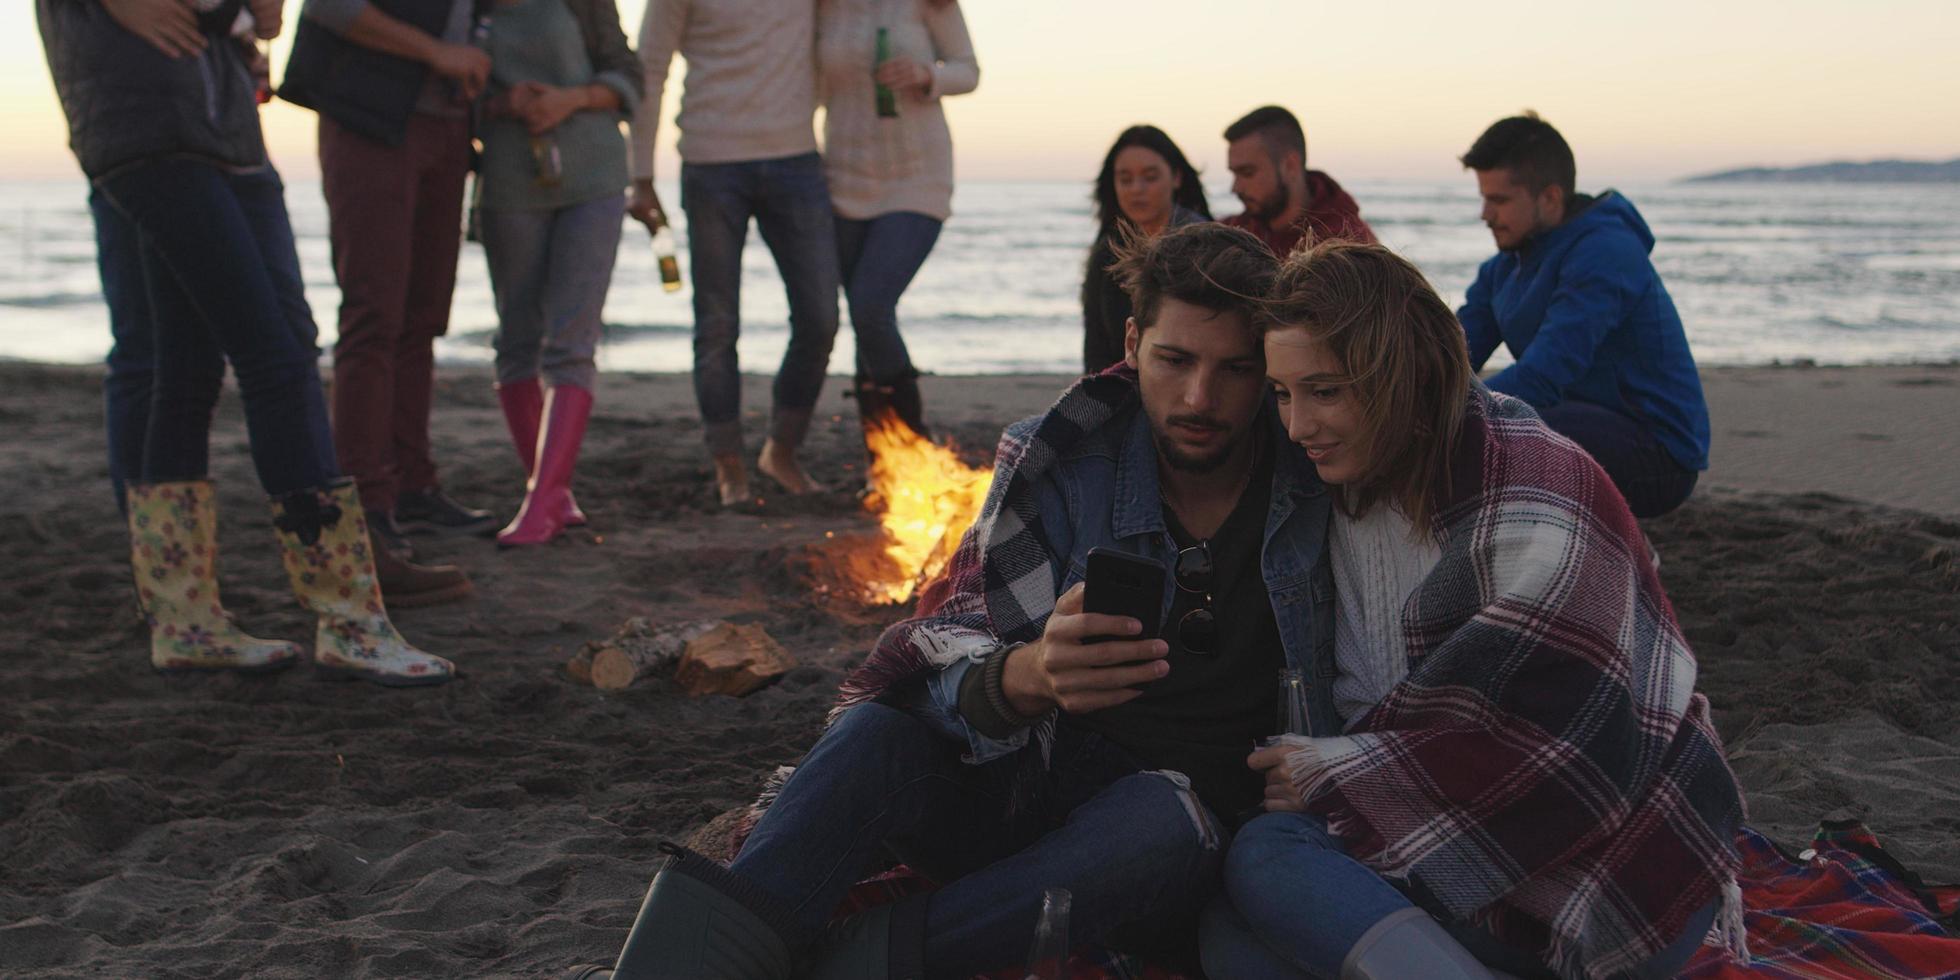 Couple enjoying bonfire with friends on beach photo